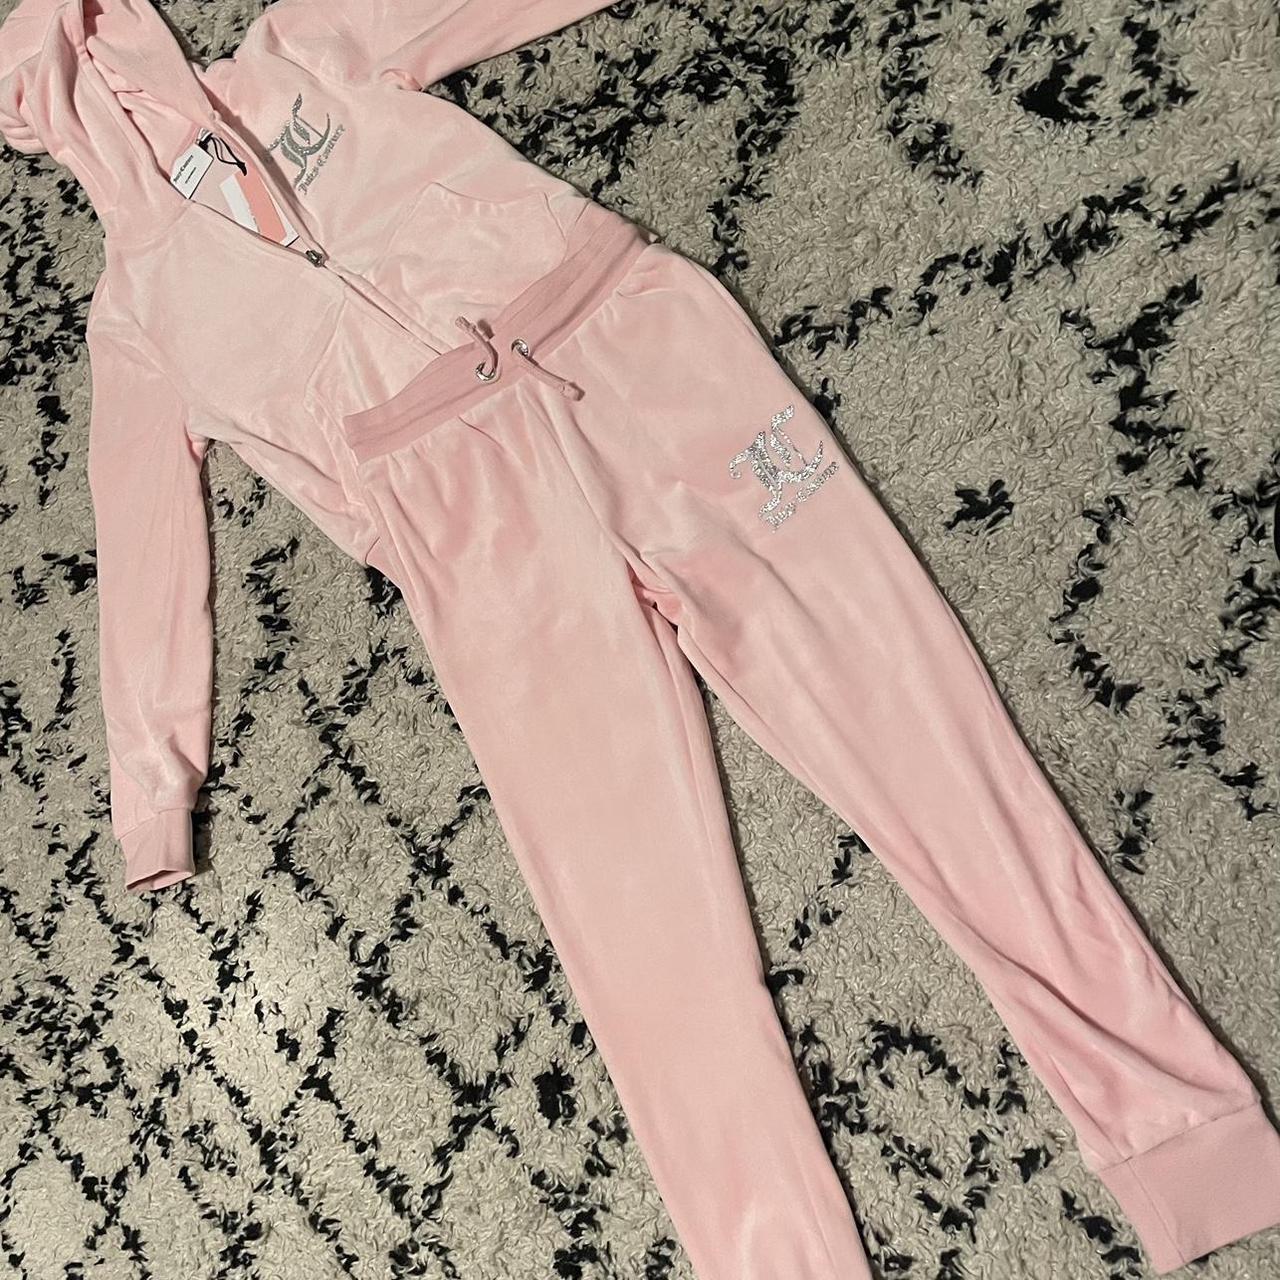 Juicy Couture Brand New Pink Velour Pajamas, - Depop